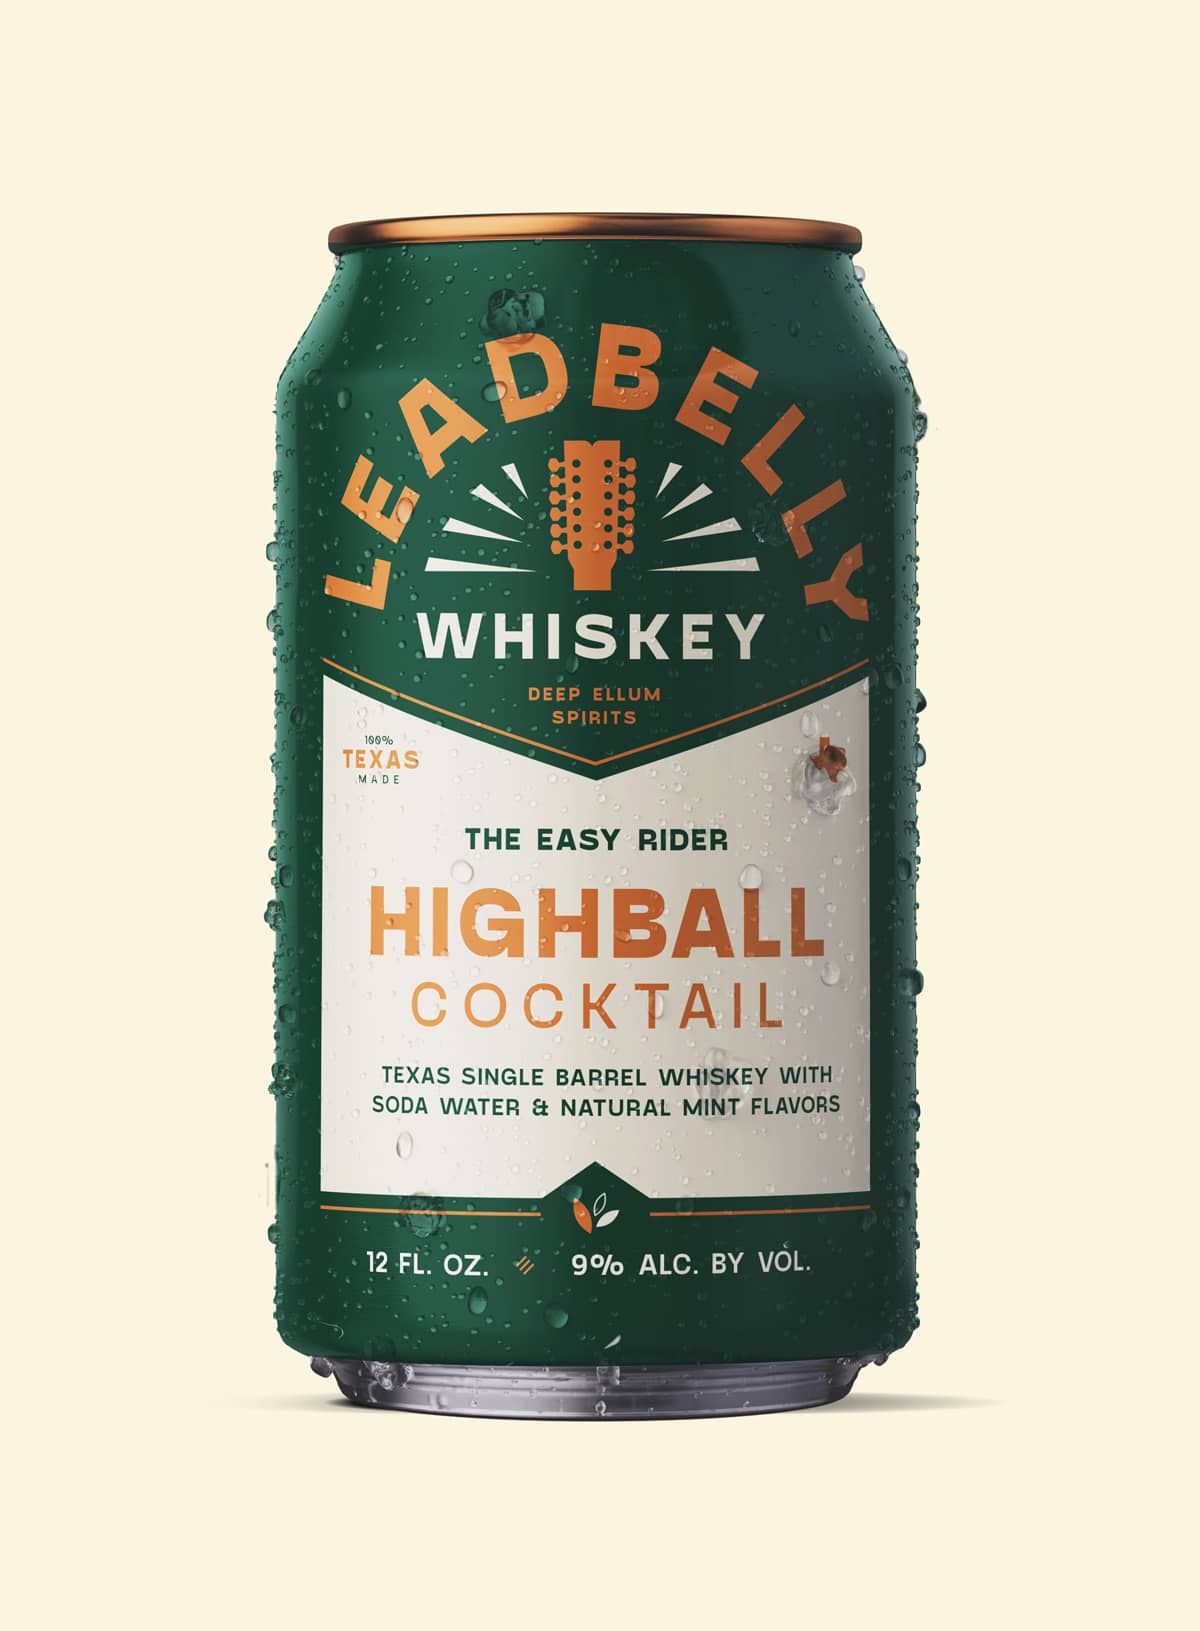 lead-belly-whiskey-highball-bg